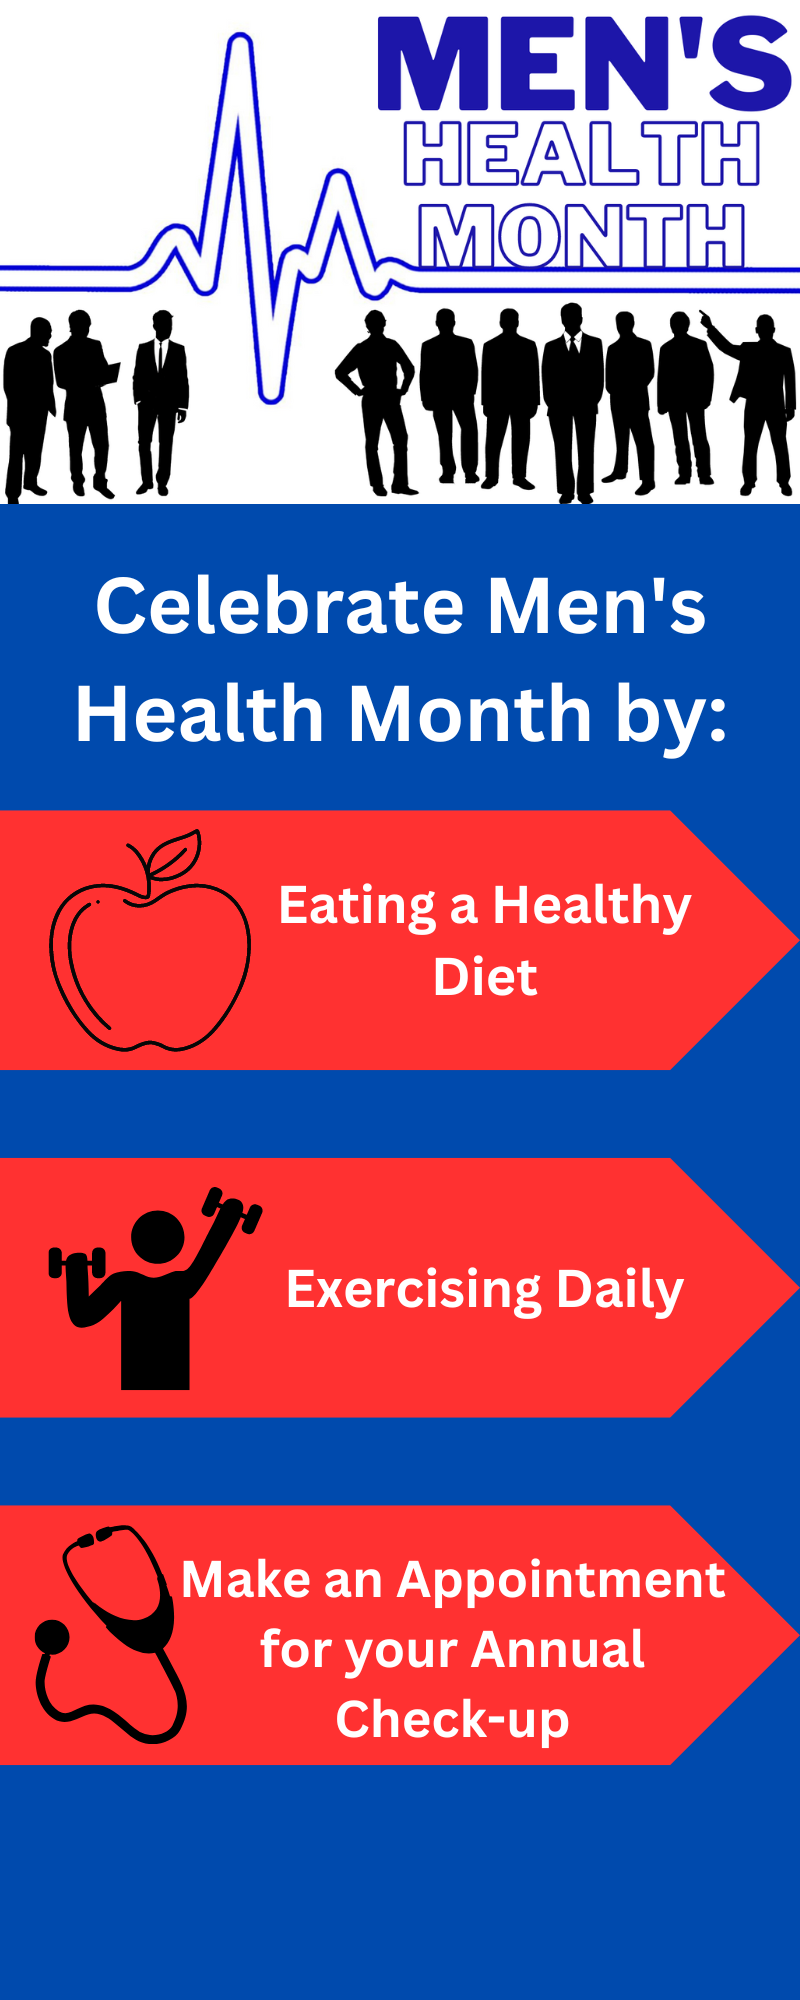 Men’s Health Month